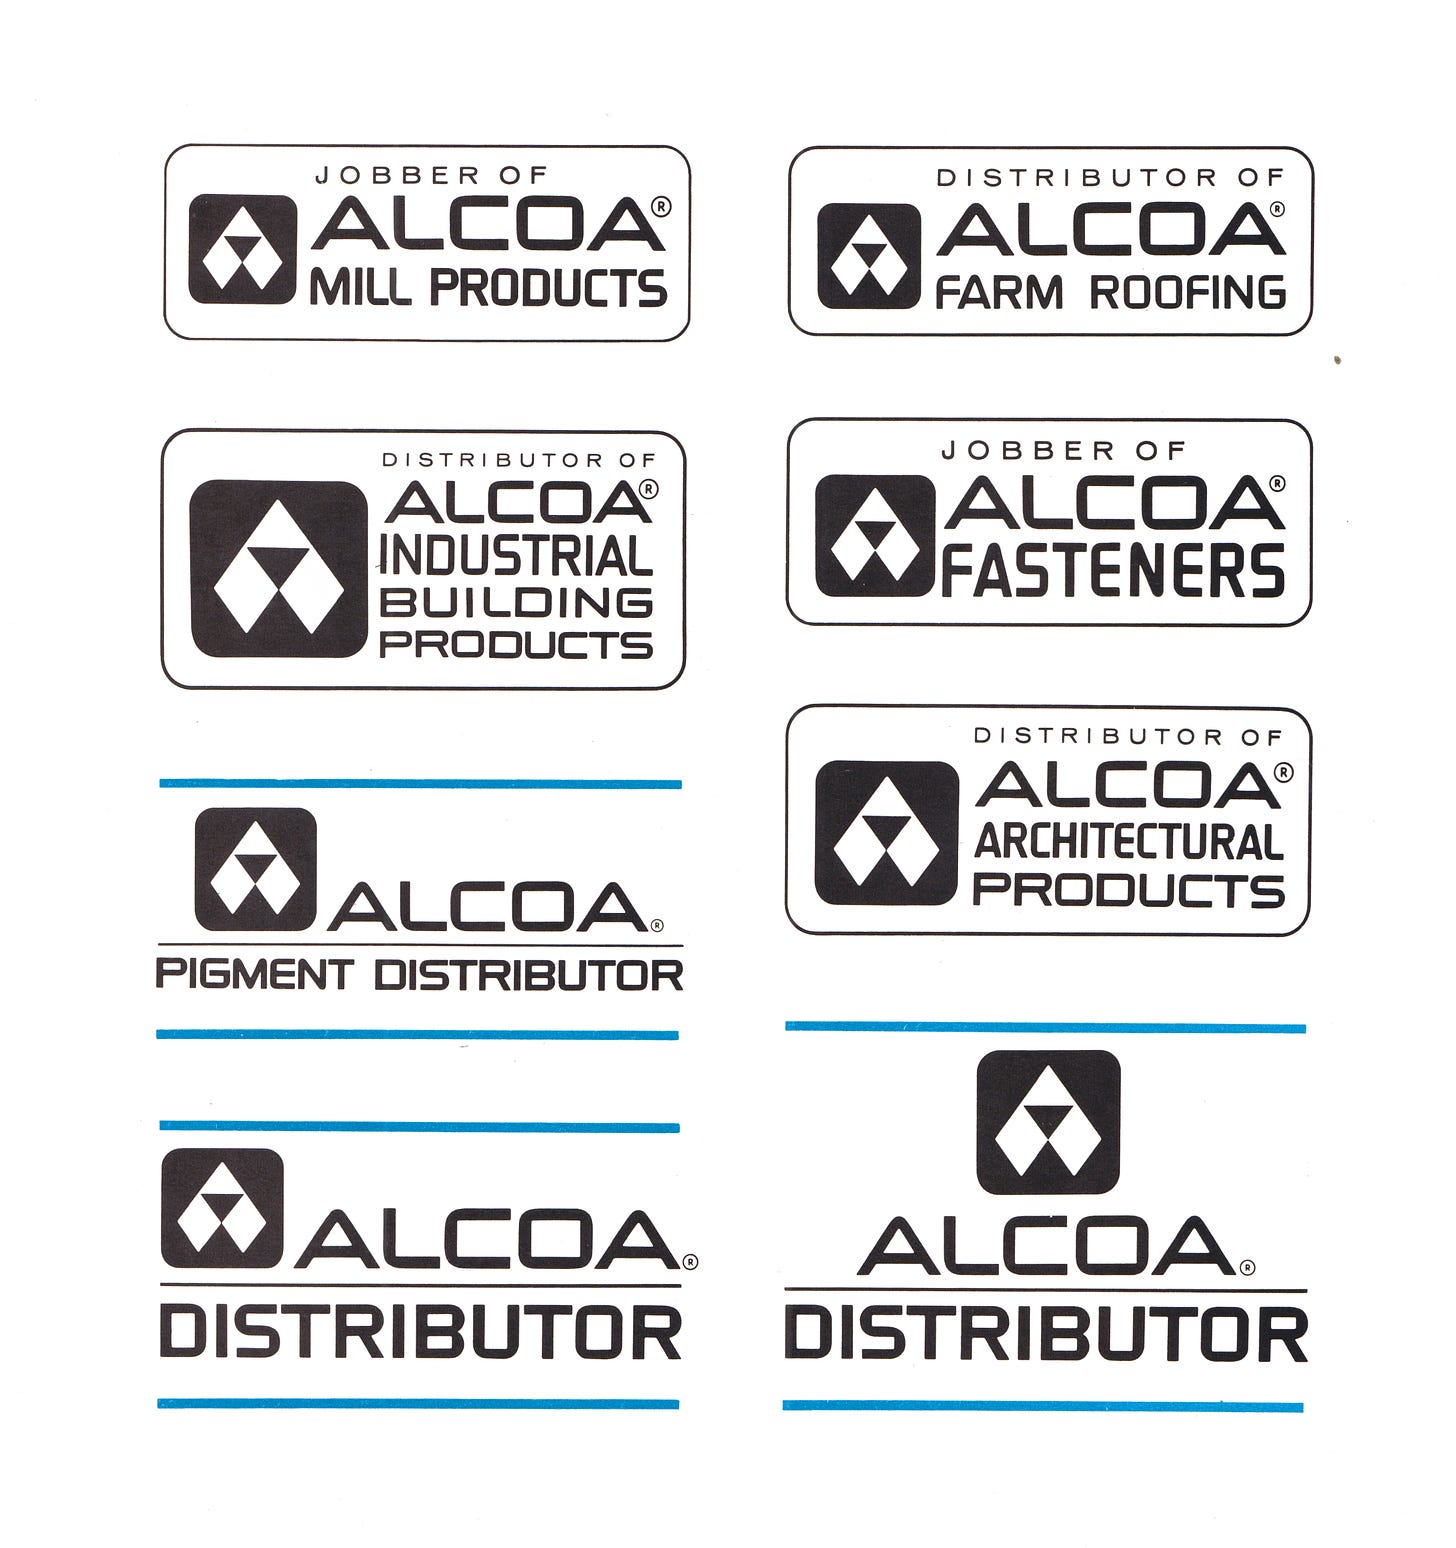 ALCOA design policy, logo design and custom typeface by Saul Bass 1962